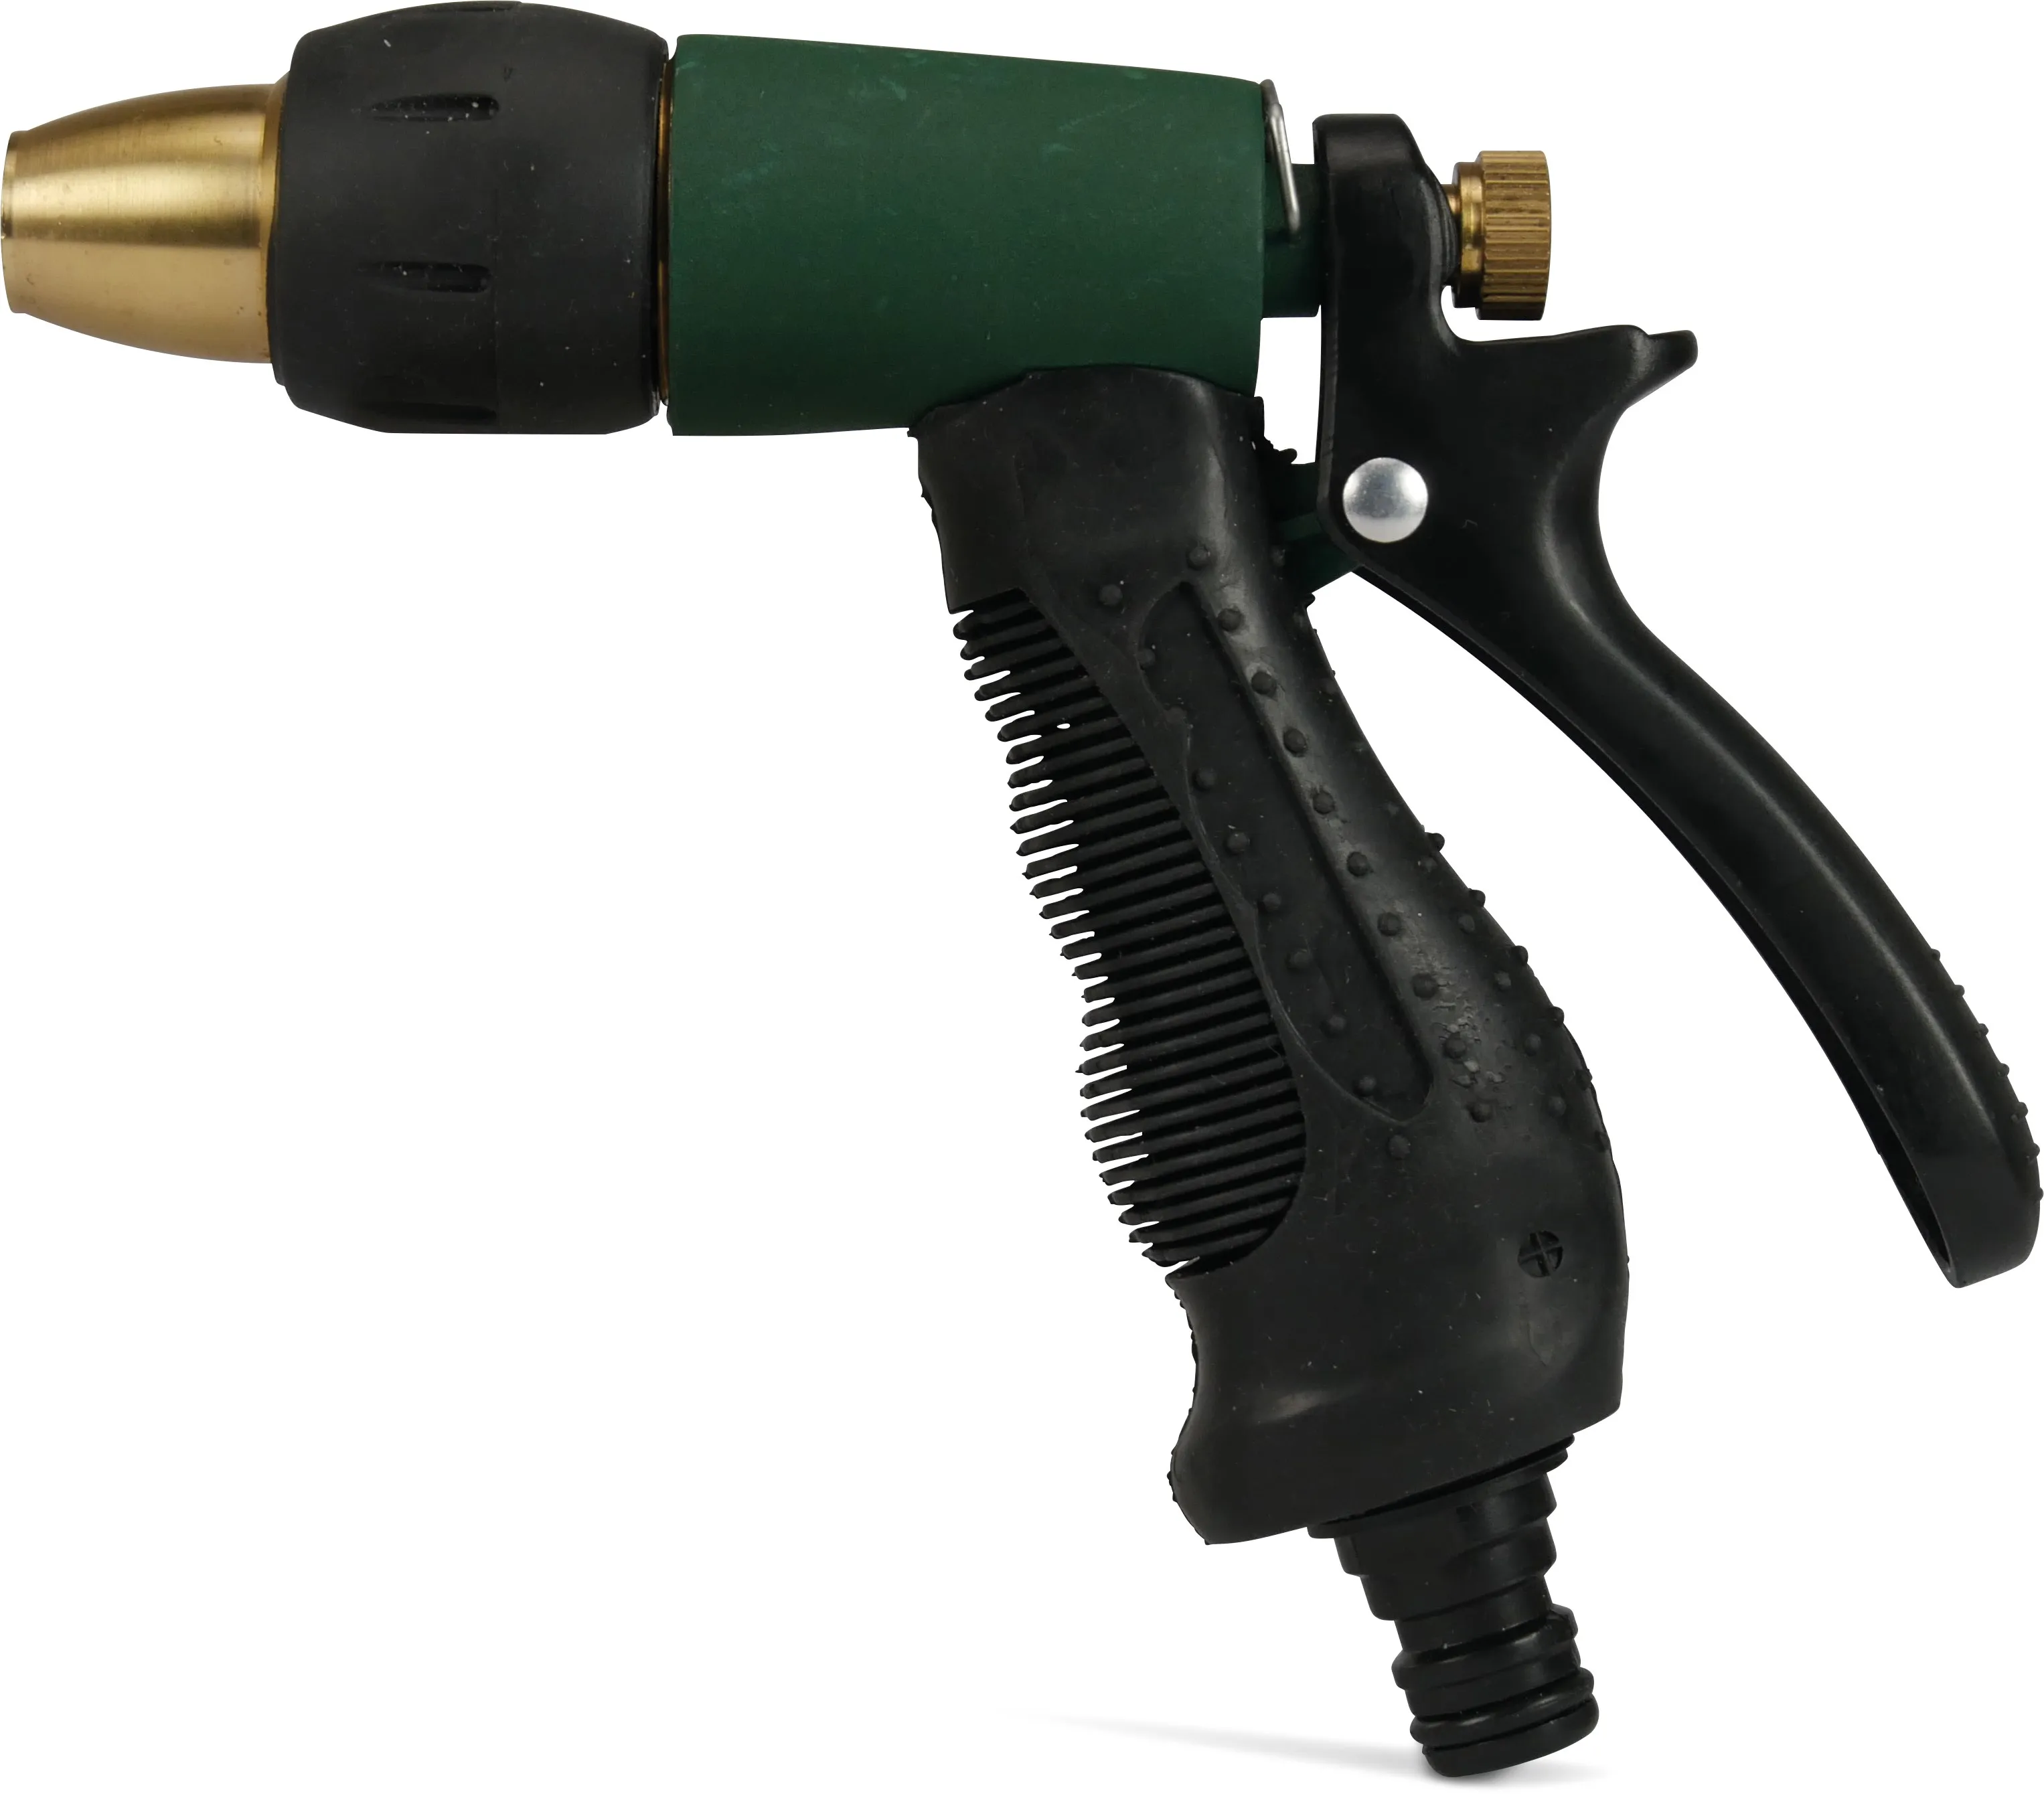 Spray pistol zamac female thread/click grey/black type adjustable nozzle TOC